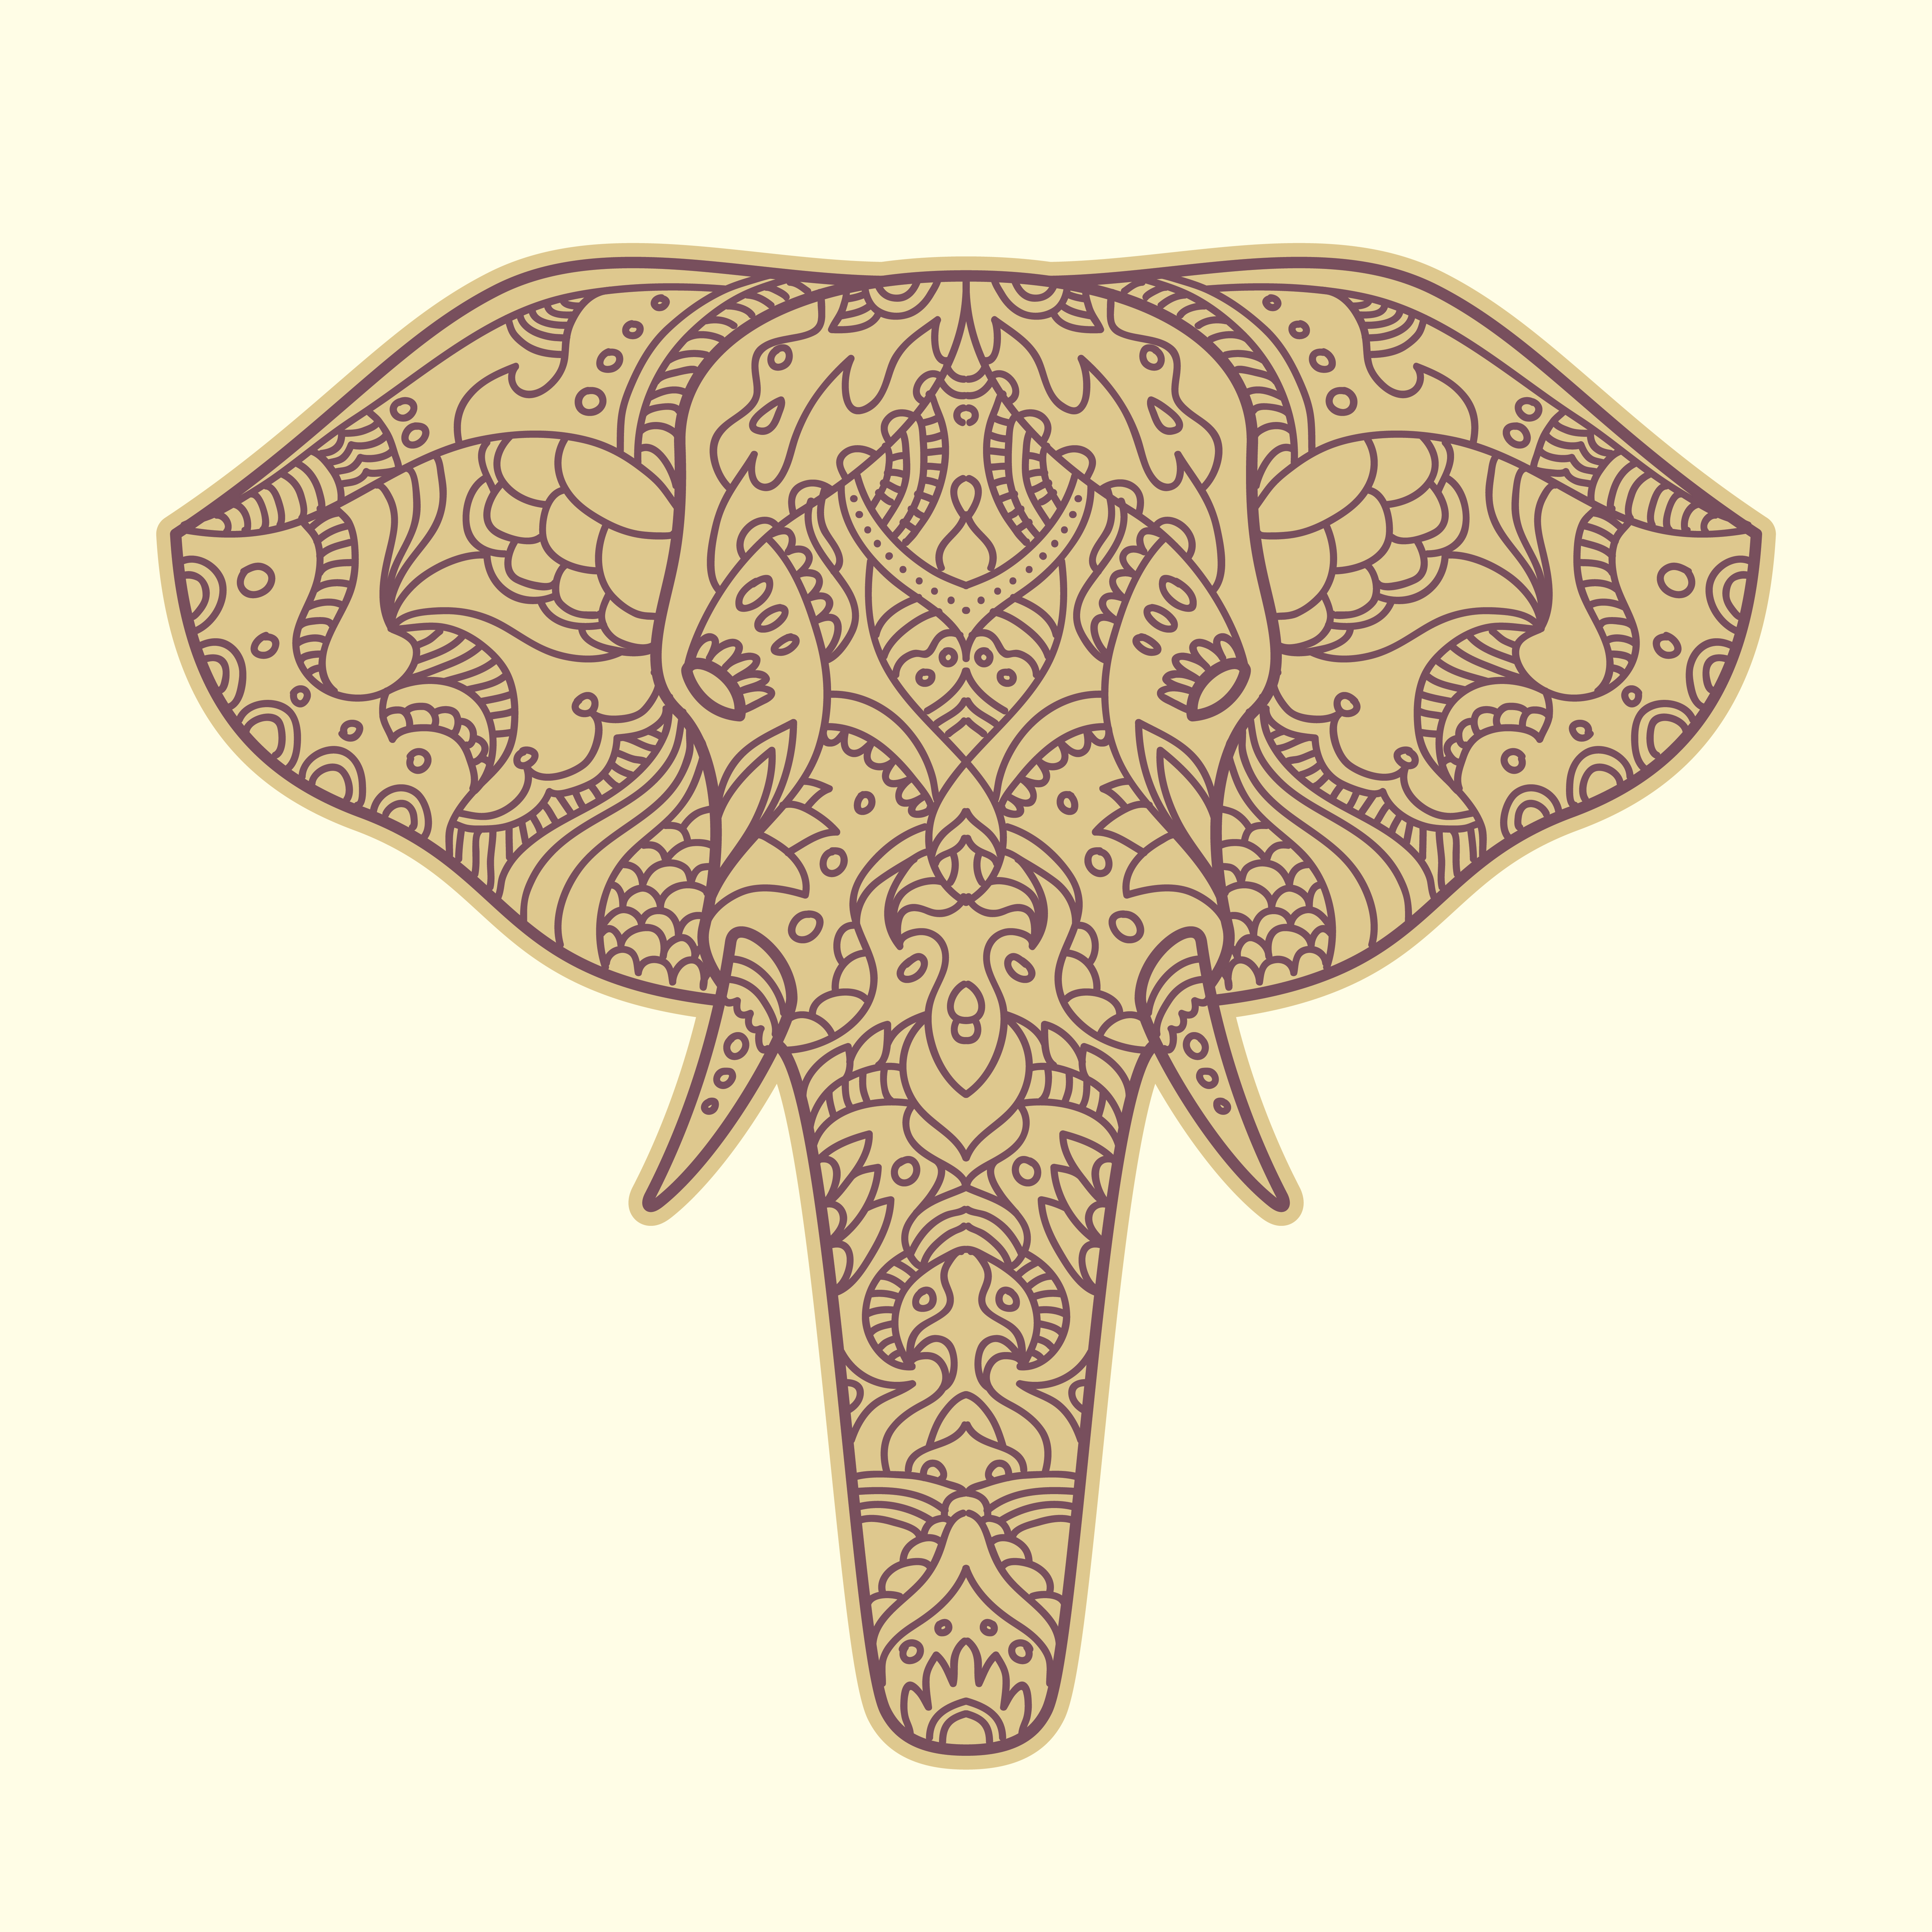 Download Elephant Mandala Free Vector Art - (64 Free Downloads)